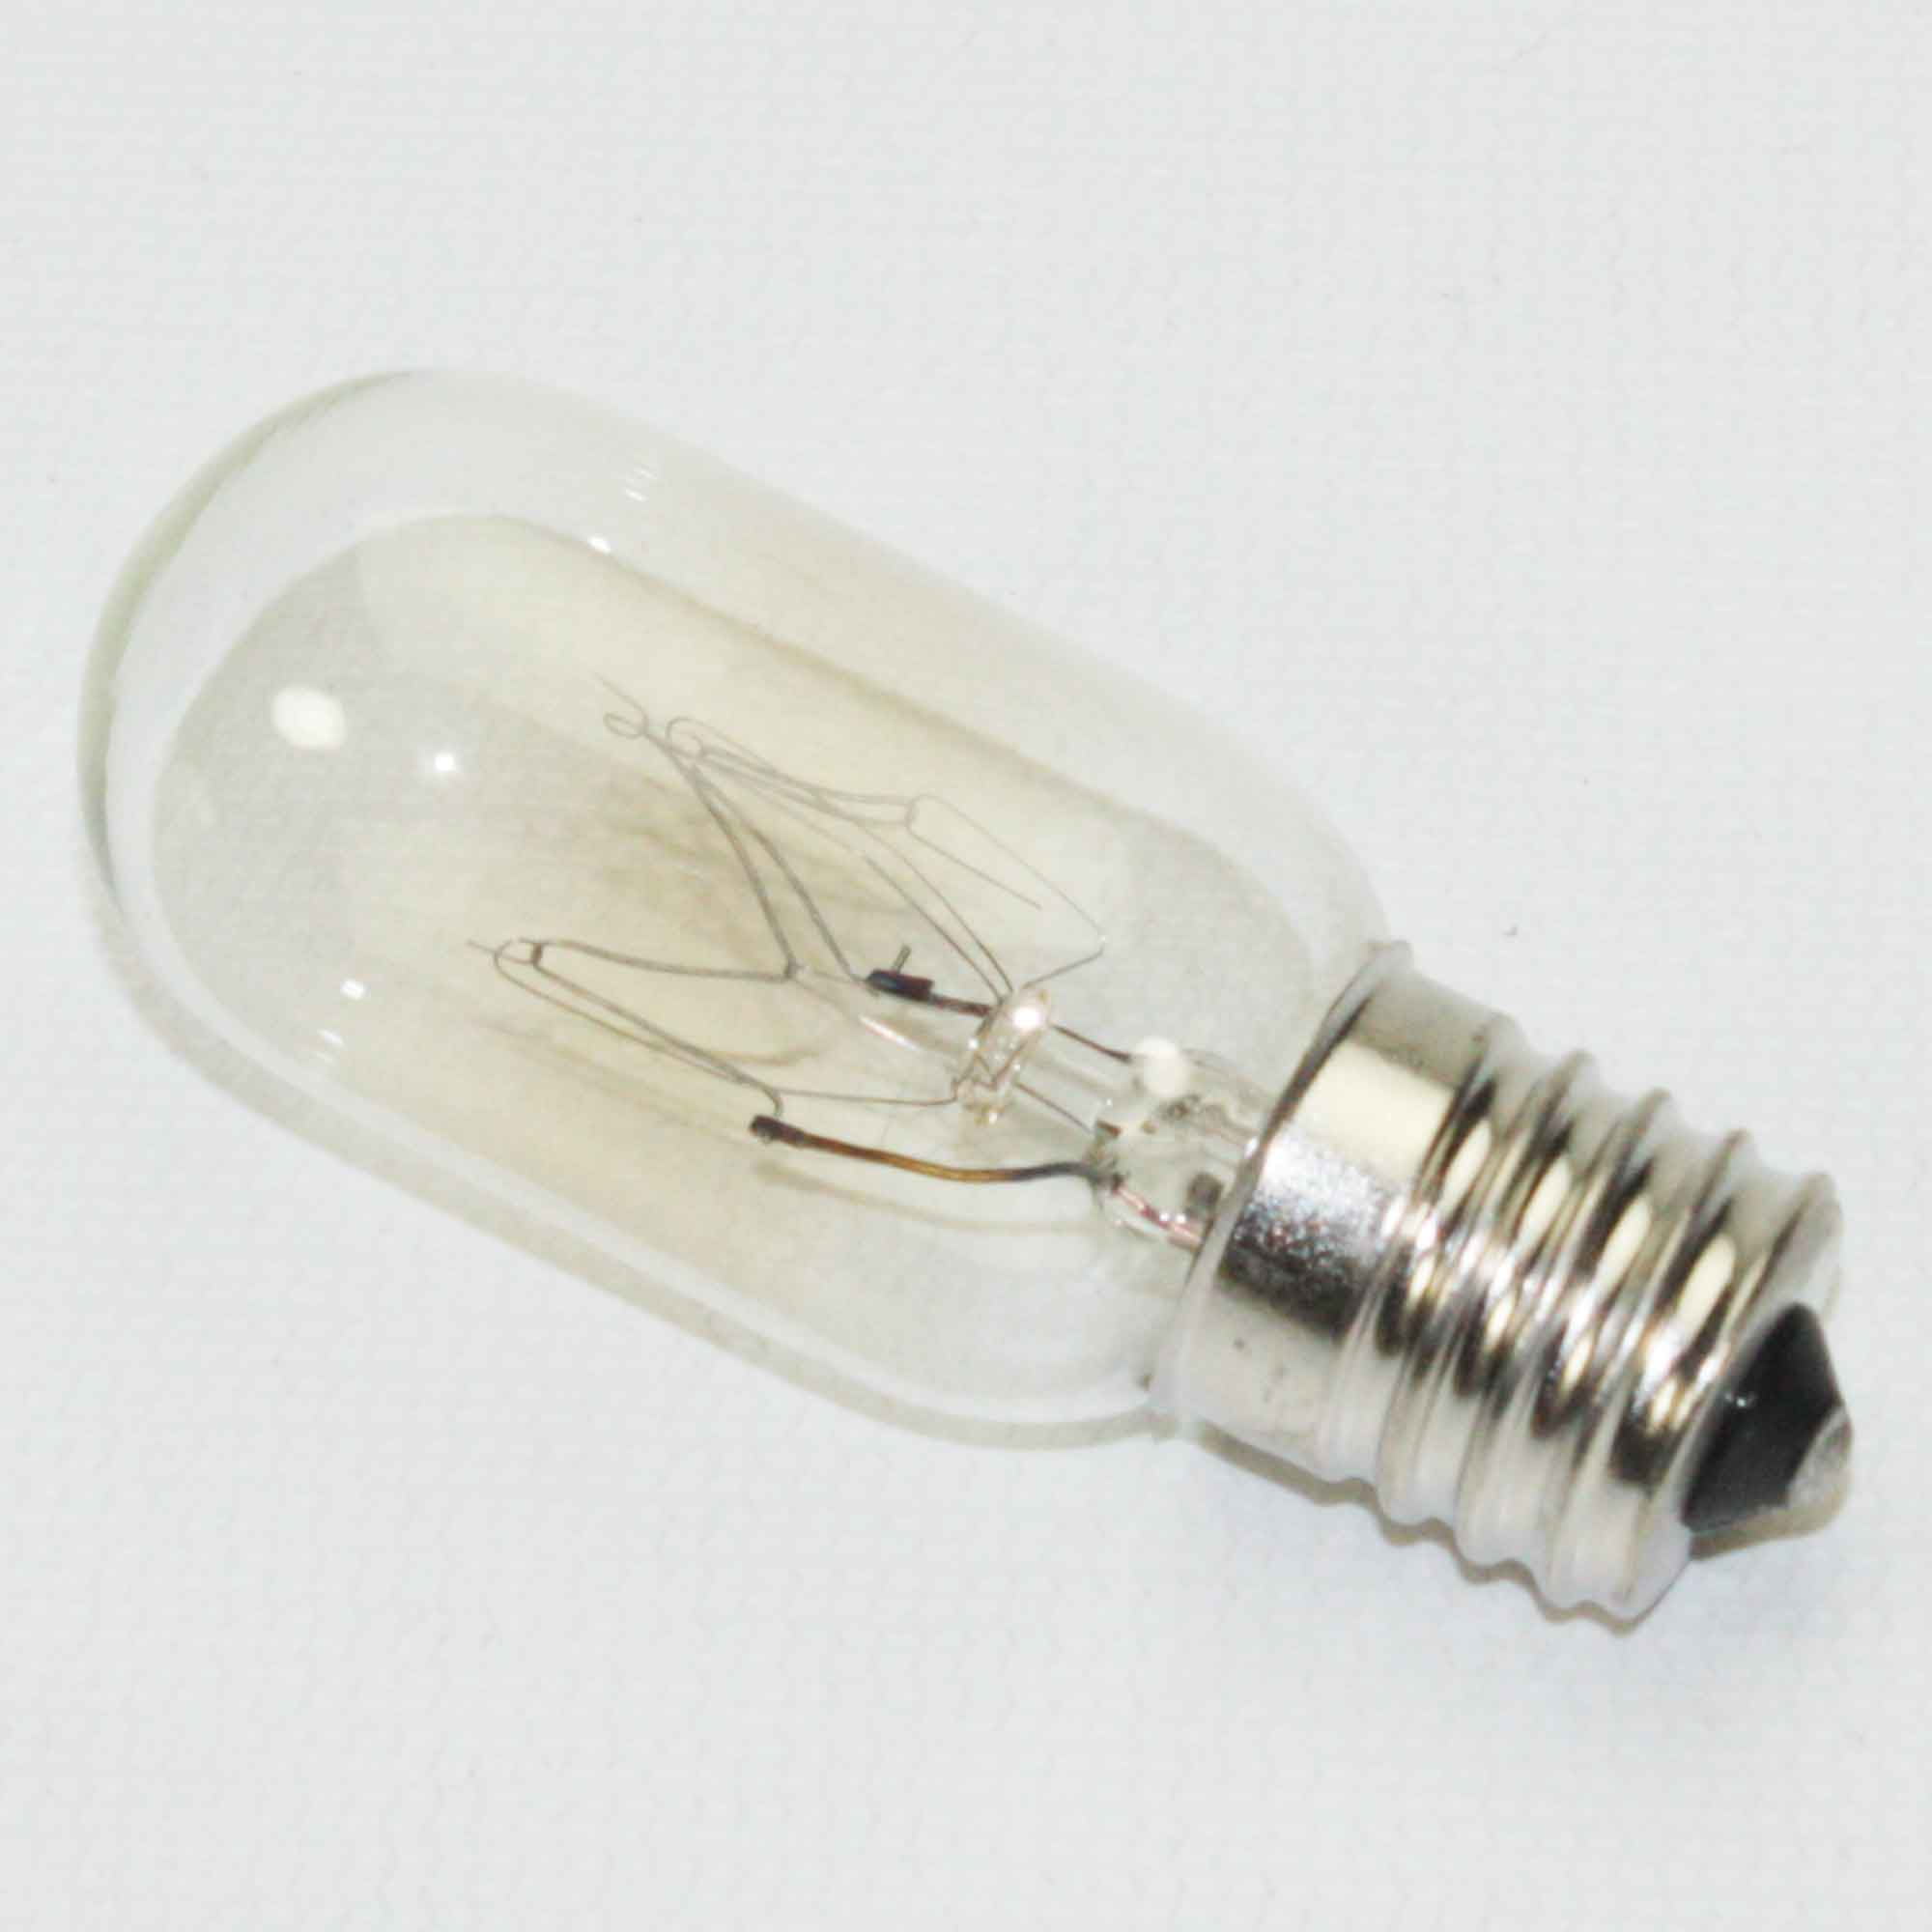 Samsung ME16K3000A Microwave light bulb 4713-001013 *